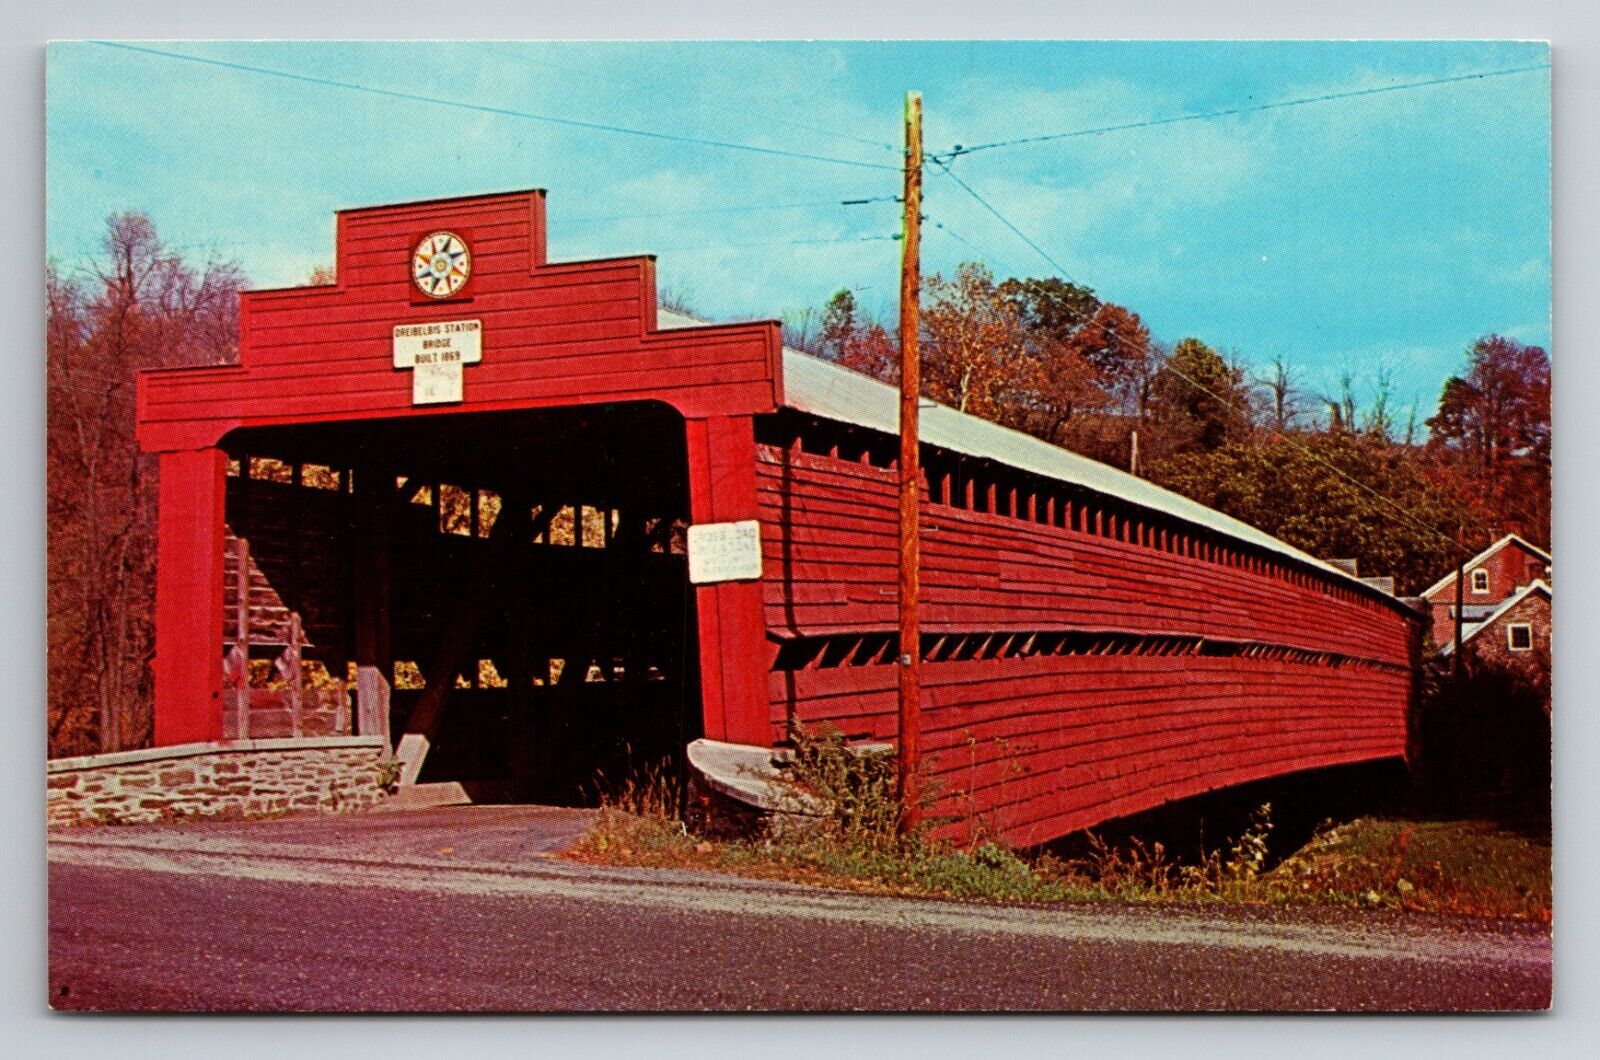 Dreibelbis Station Covered Bridge Lenhartsville Pennsylvania Unposted Postcard